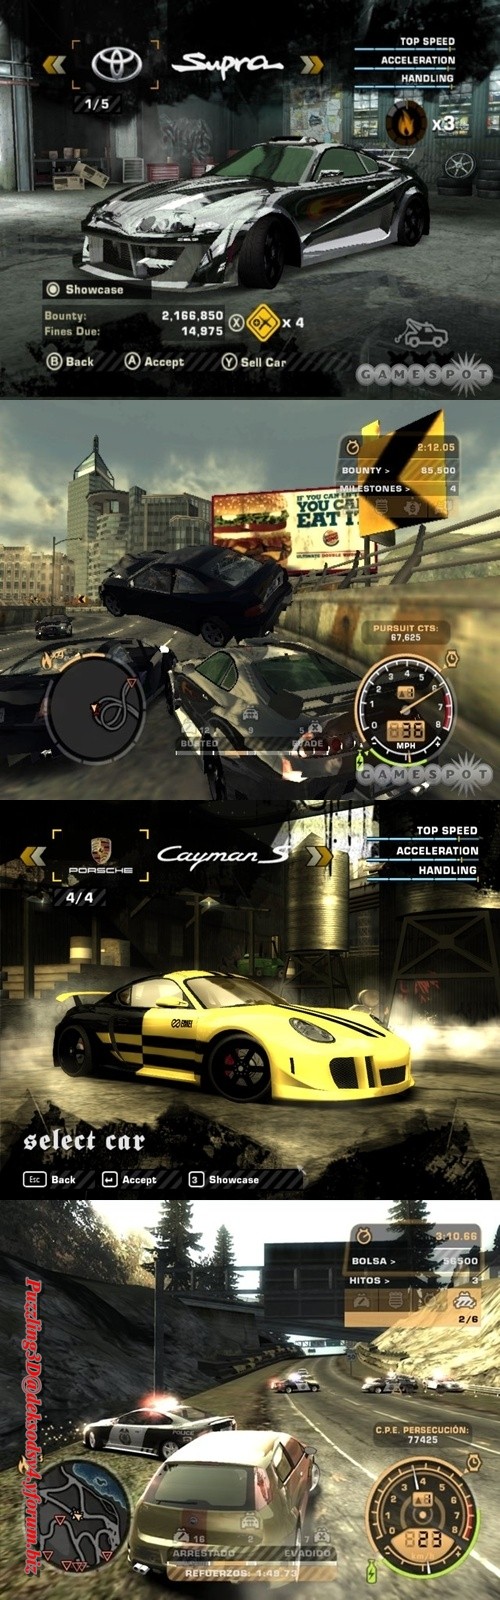 [PC] Need For Speed : Most Wanted 2005 Thai แถมภาค 2012 [ฺBitTorent + Repack + Update + Patch ภาษาไทย + Crack]	แถมการเพิ่มรถ และอื่นๆ รายละเอียดด้านใน... - Page 5 Need-f10